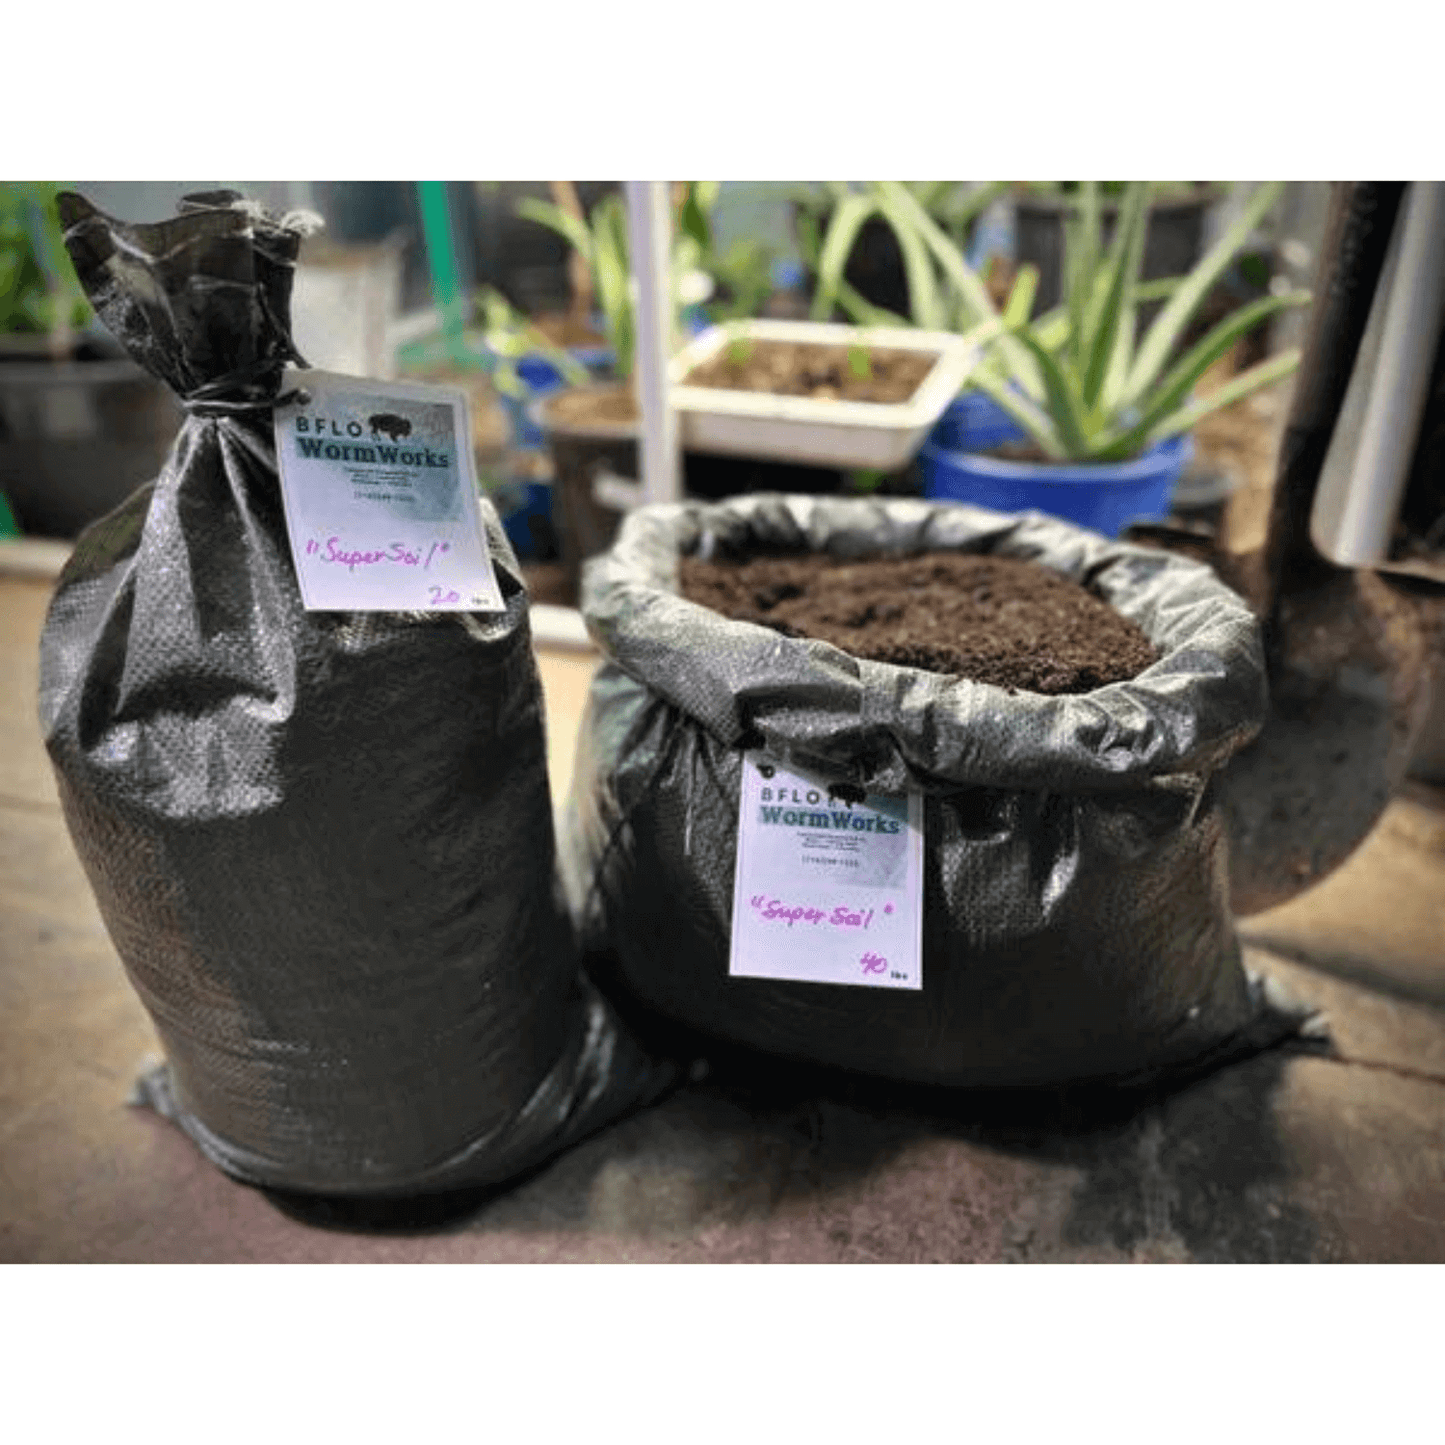 BFLO Worm Works Worm Castings, 20 lb Bag BFLOWW20 Planting & Watering